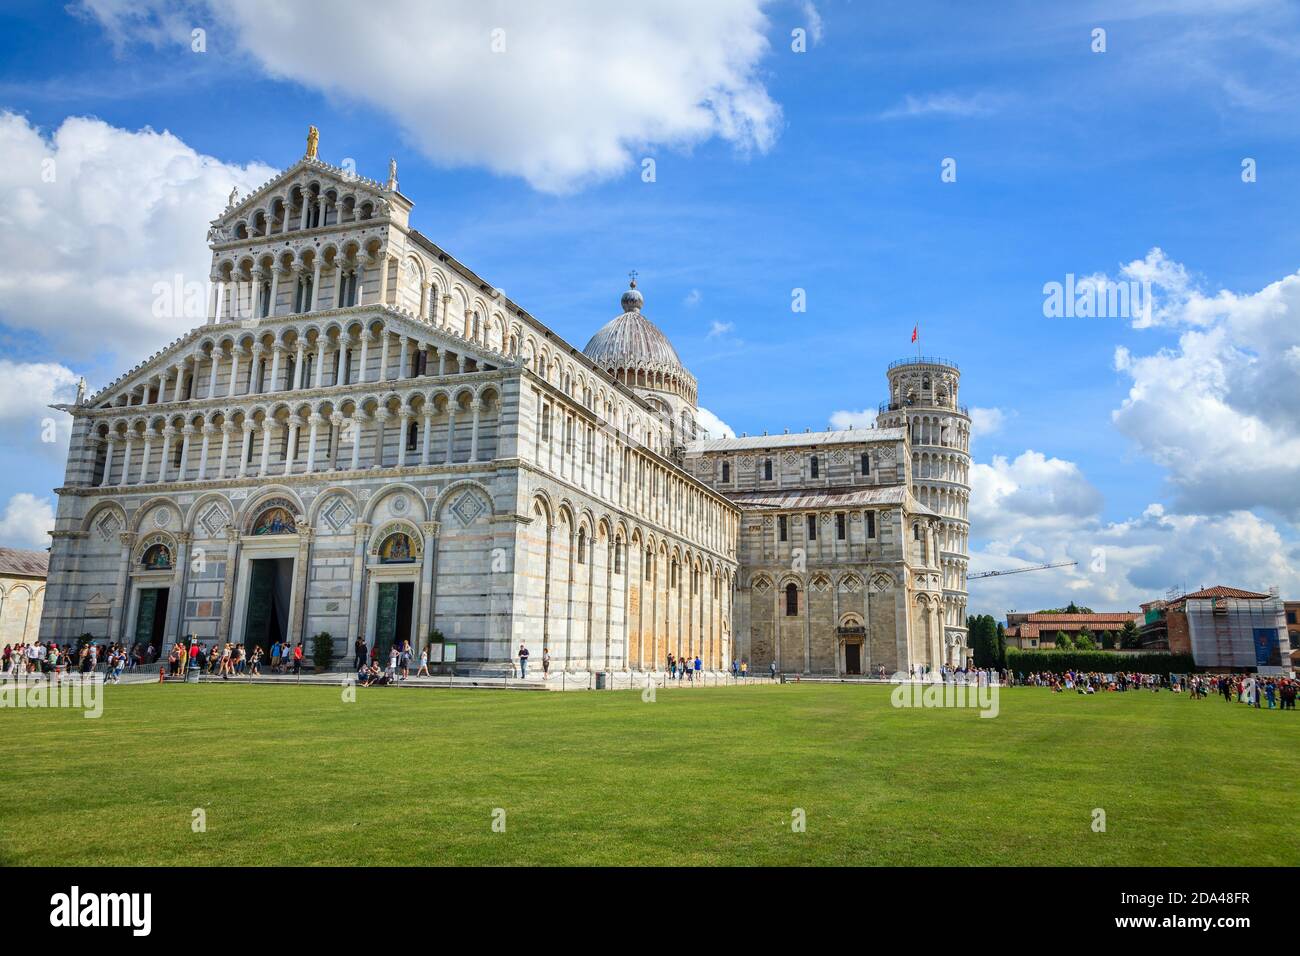 Pisa, Italien, 22. September 2015: Berühmte Piazza dei Miracoli (Domplatz) in Pisa, Italien mit dem Baptisterium, der Kathedrale und dem Campanile Stockfoto